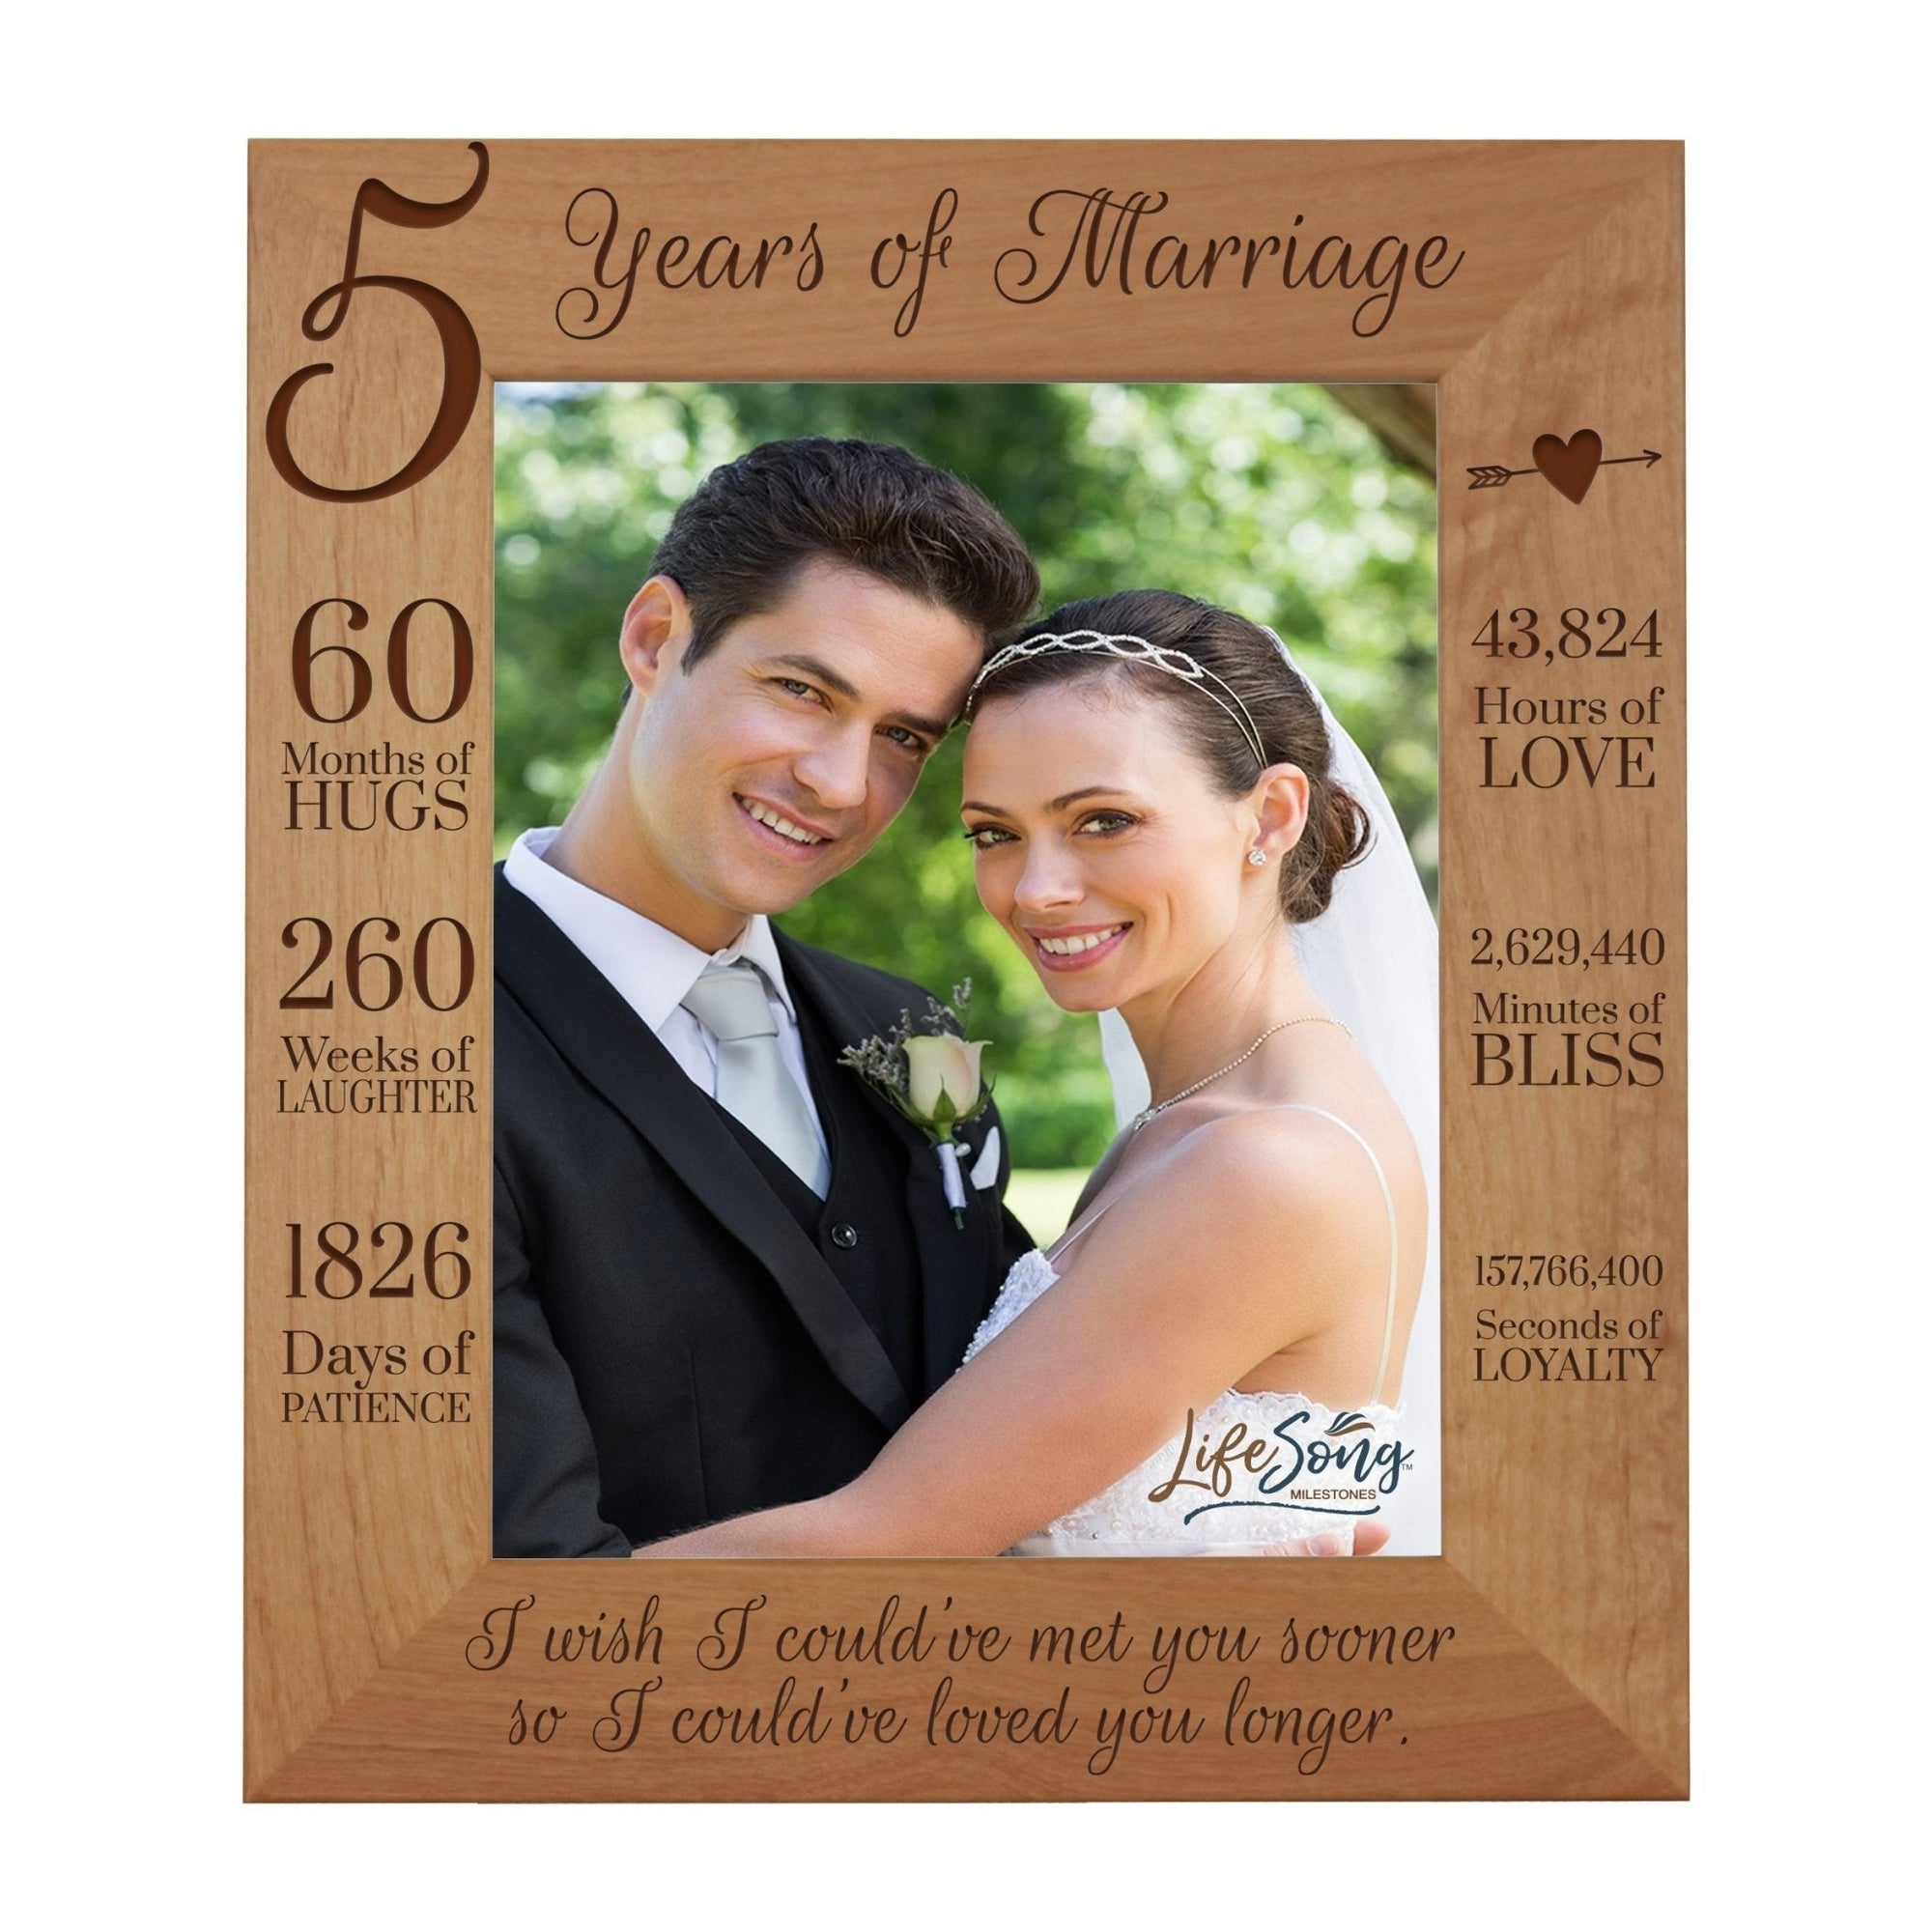 Couples 5th Wedding Anniversary Photo Frame Home Decor Gift Ideas - Met You Sooner - LifeSong Milestones